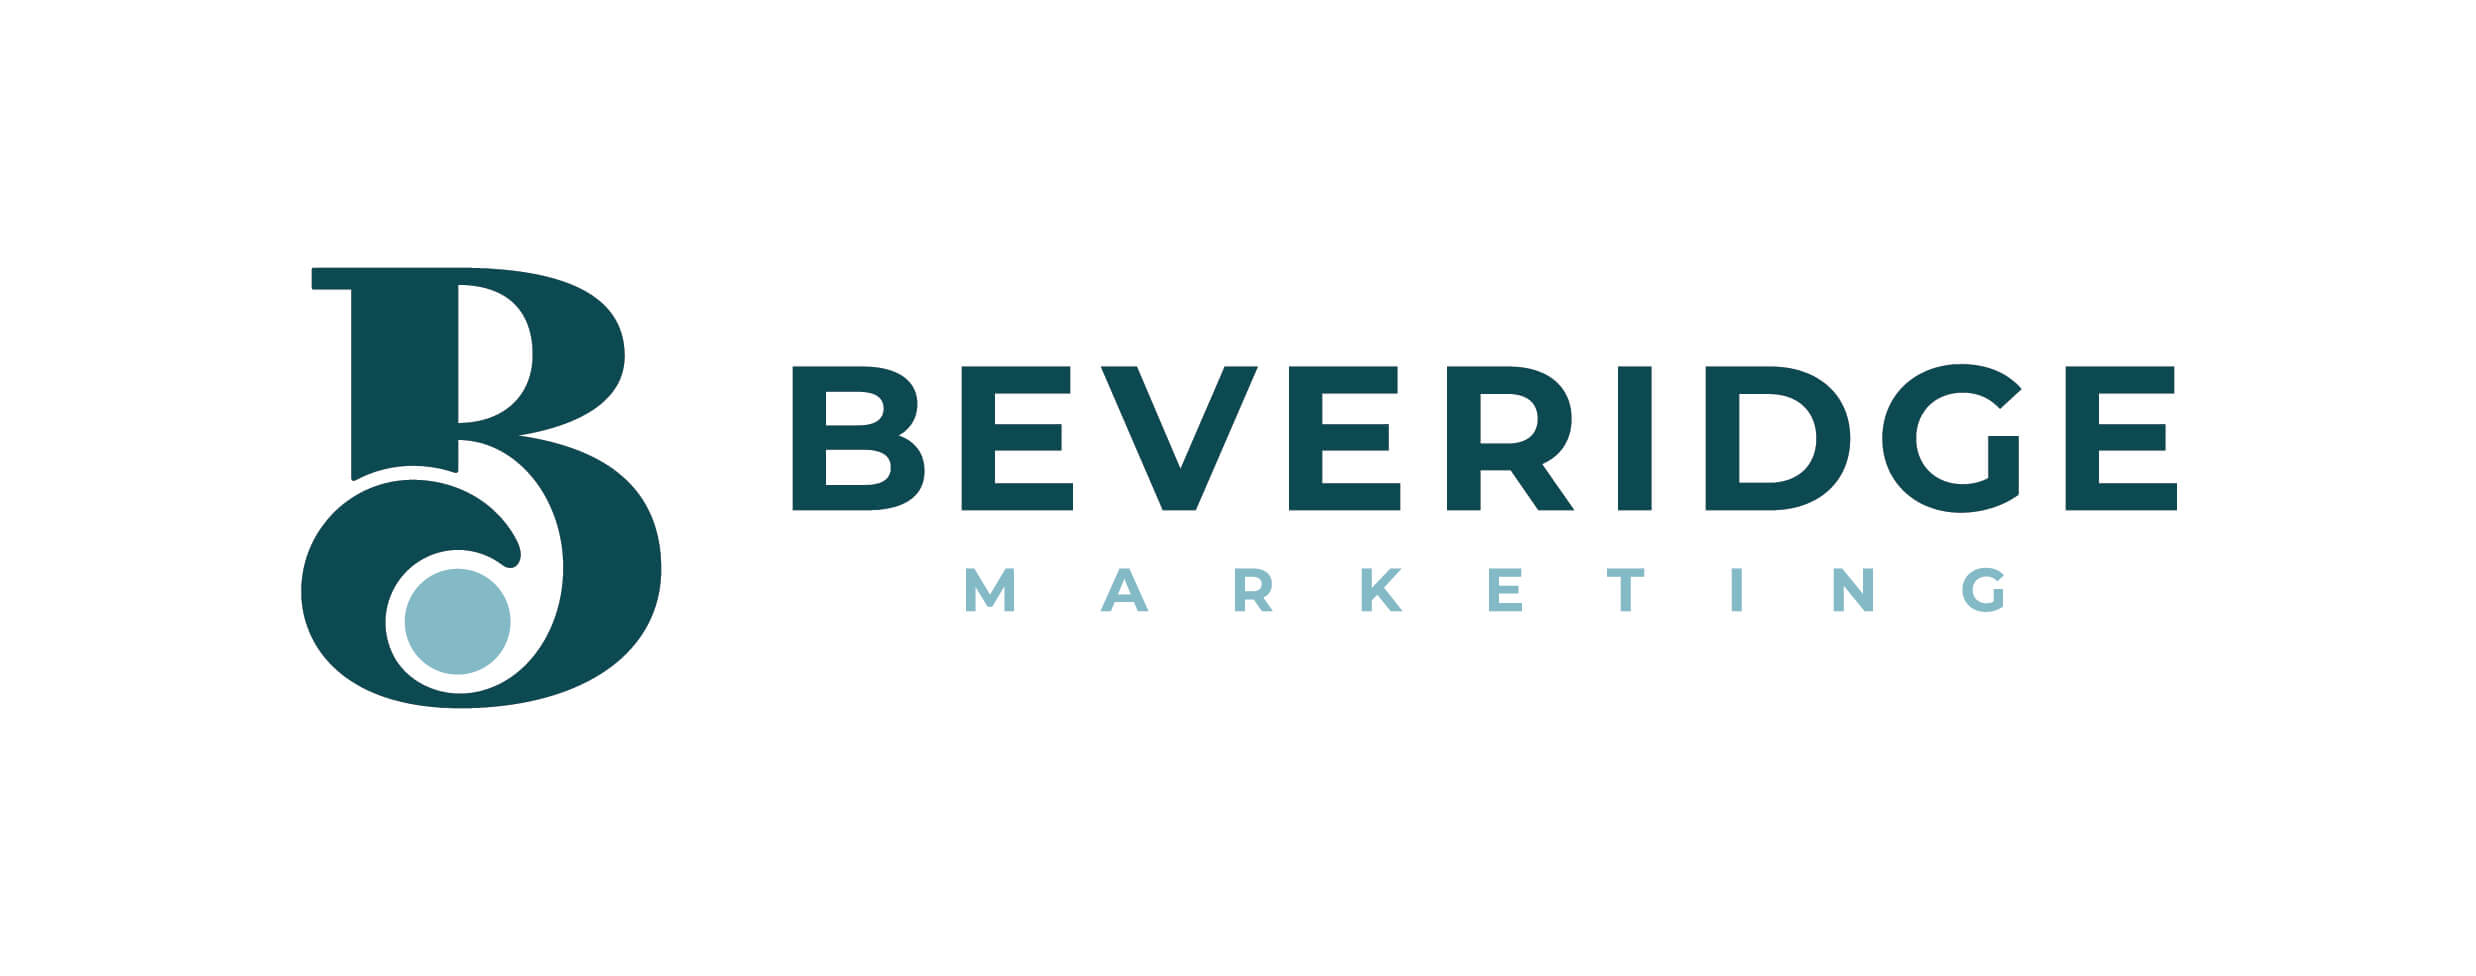 Beveridge Marketing